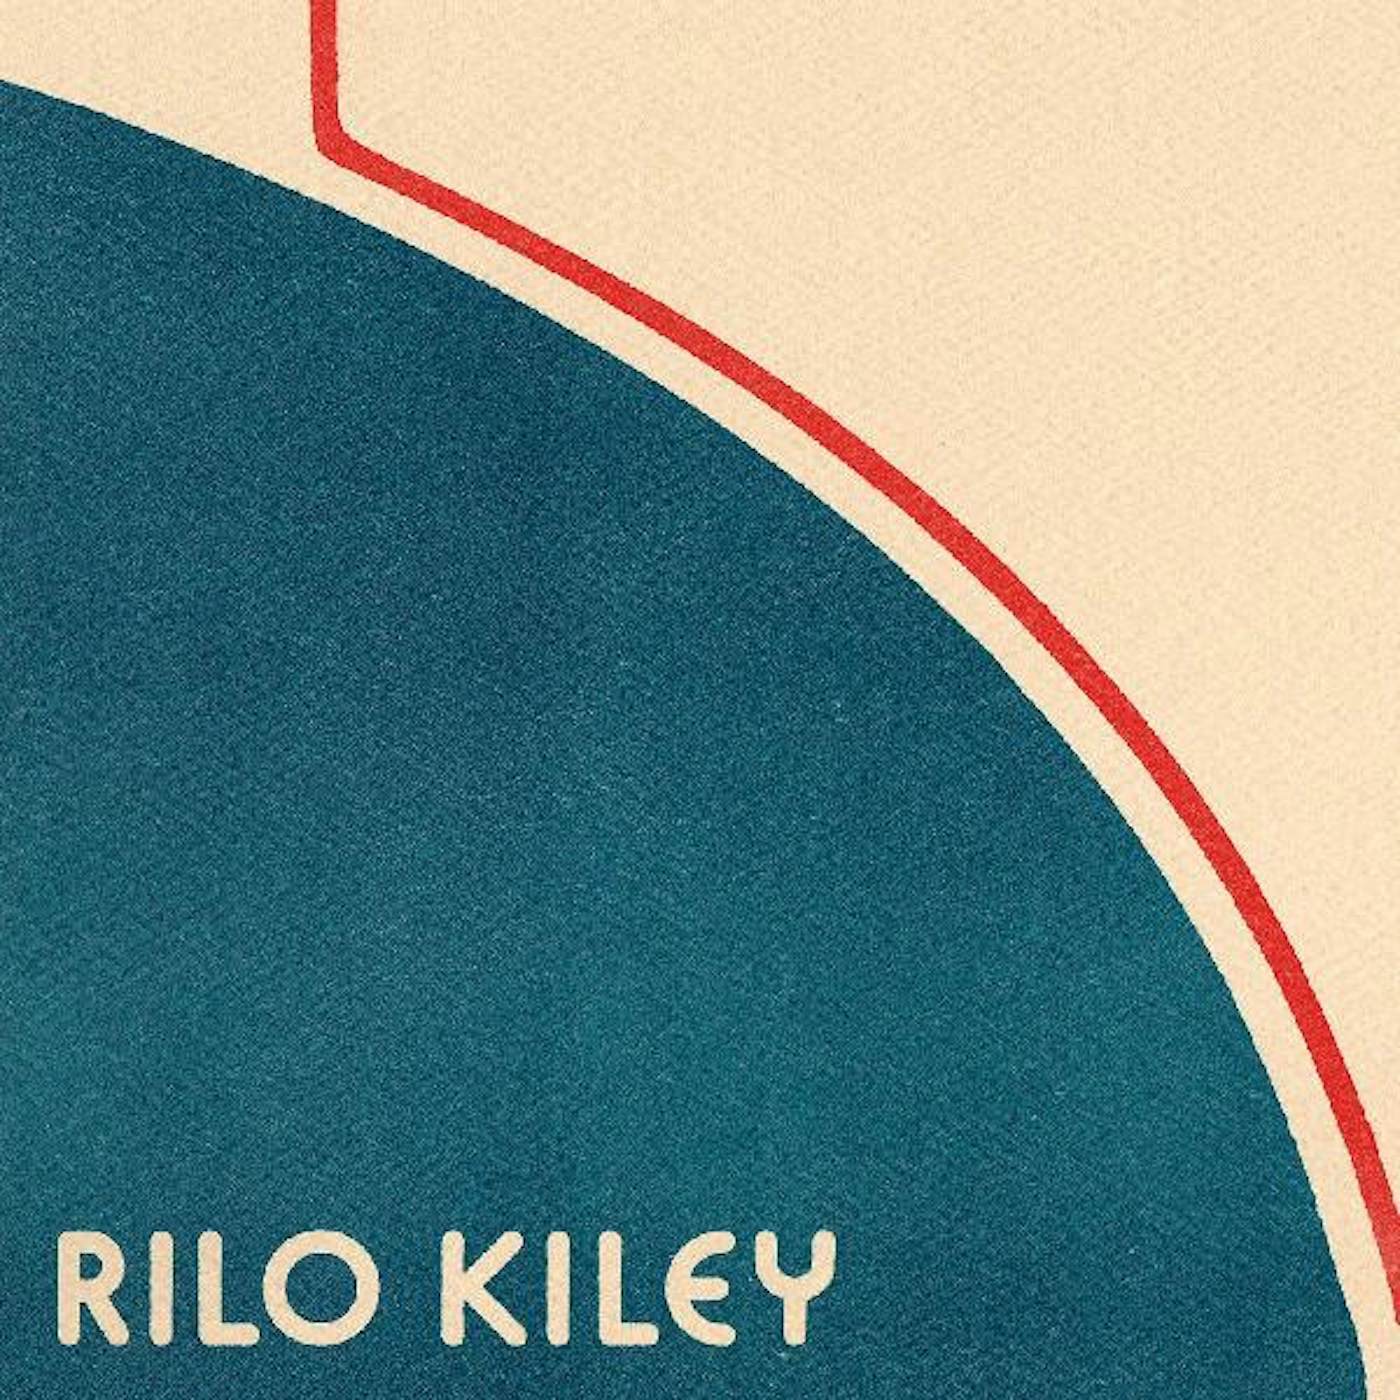 RILO KILEY (PINK VINYL) Vinyl Record